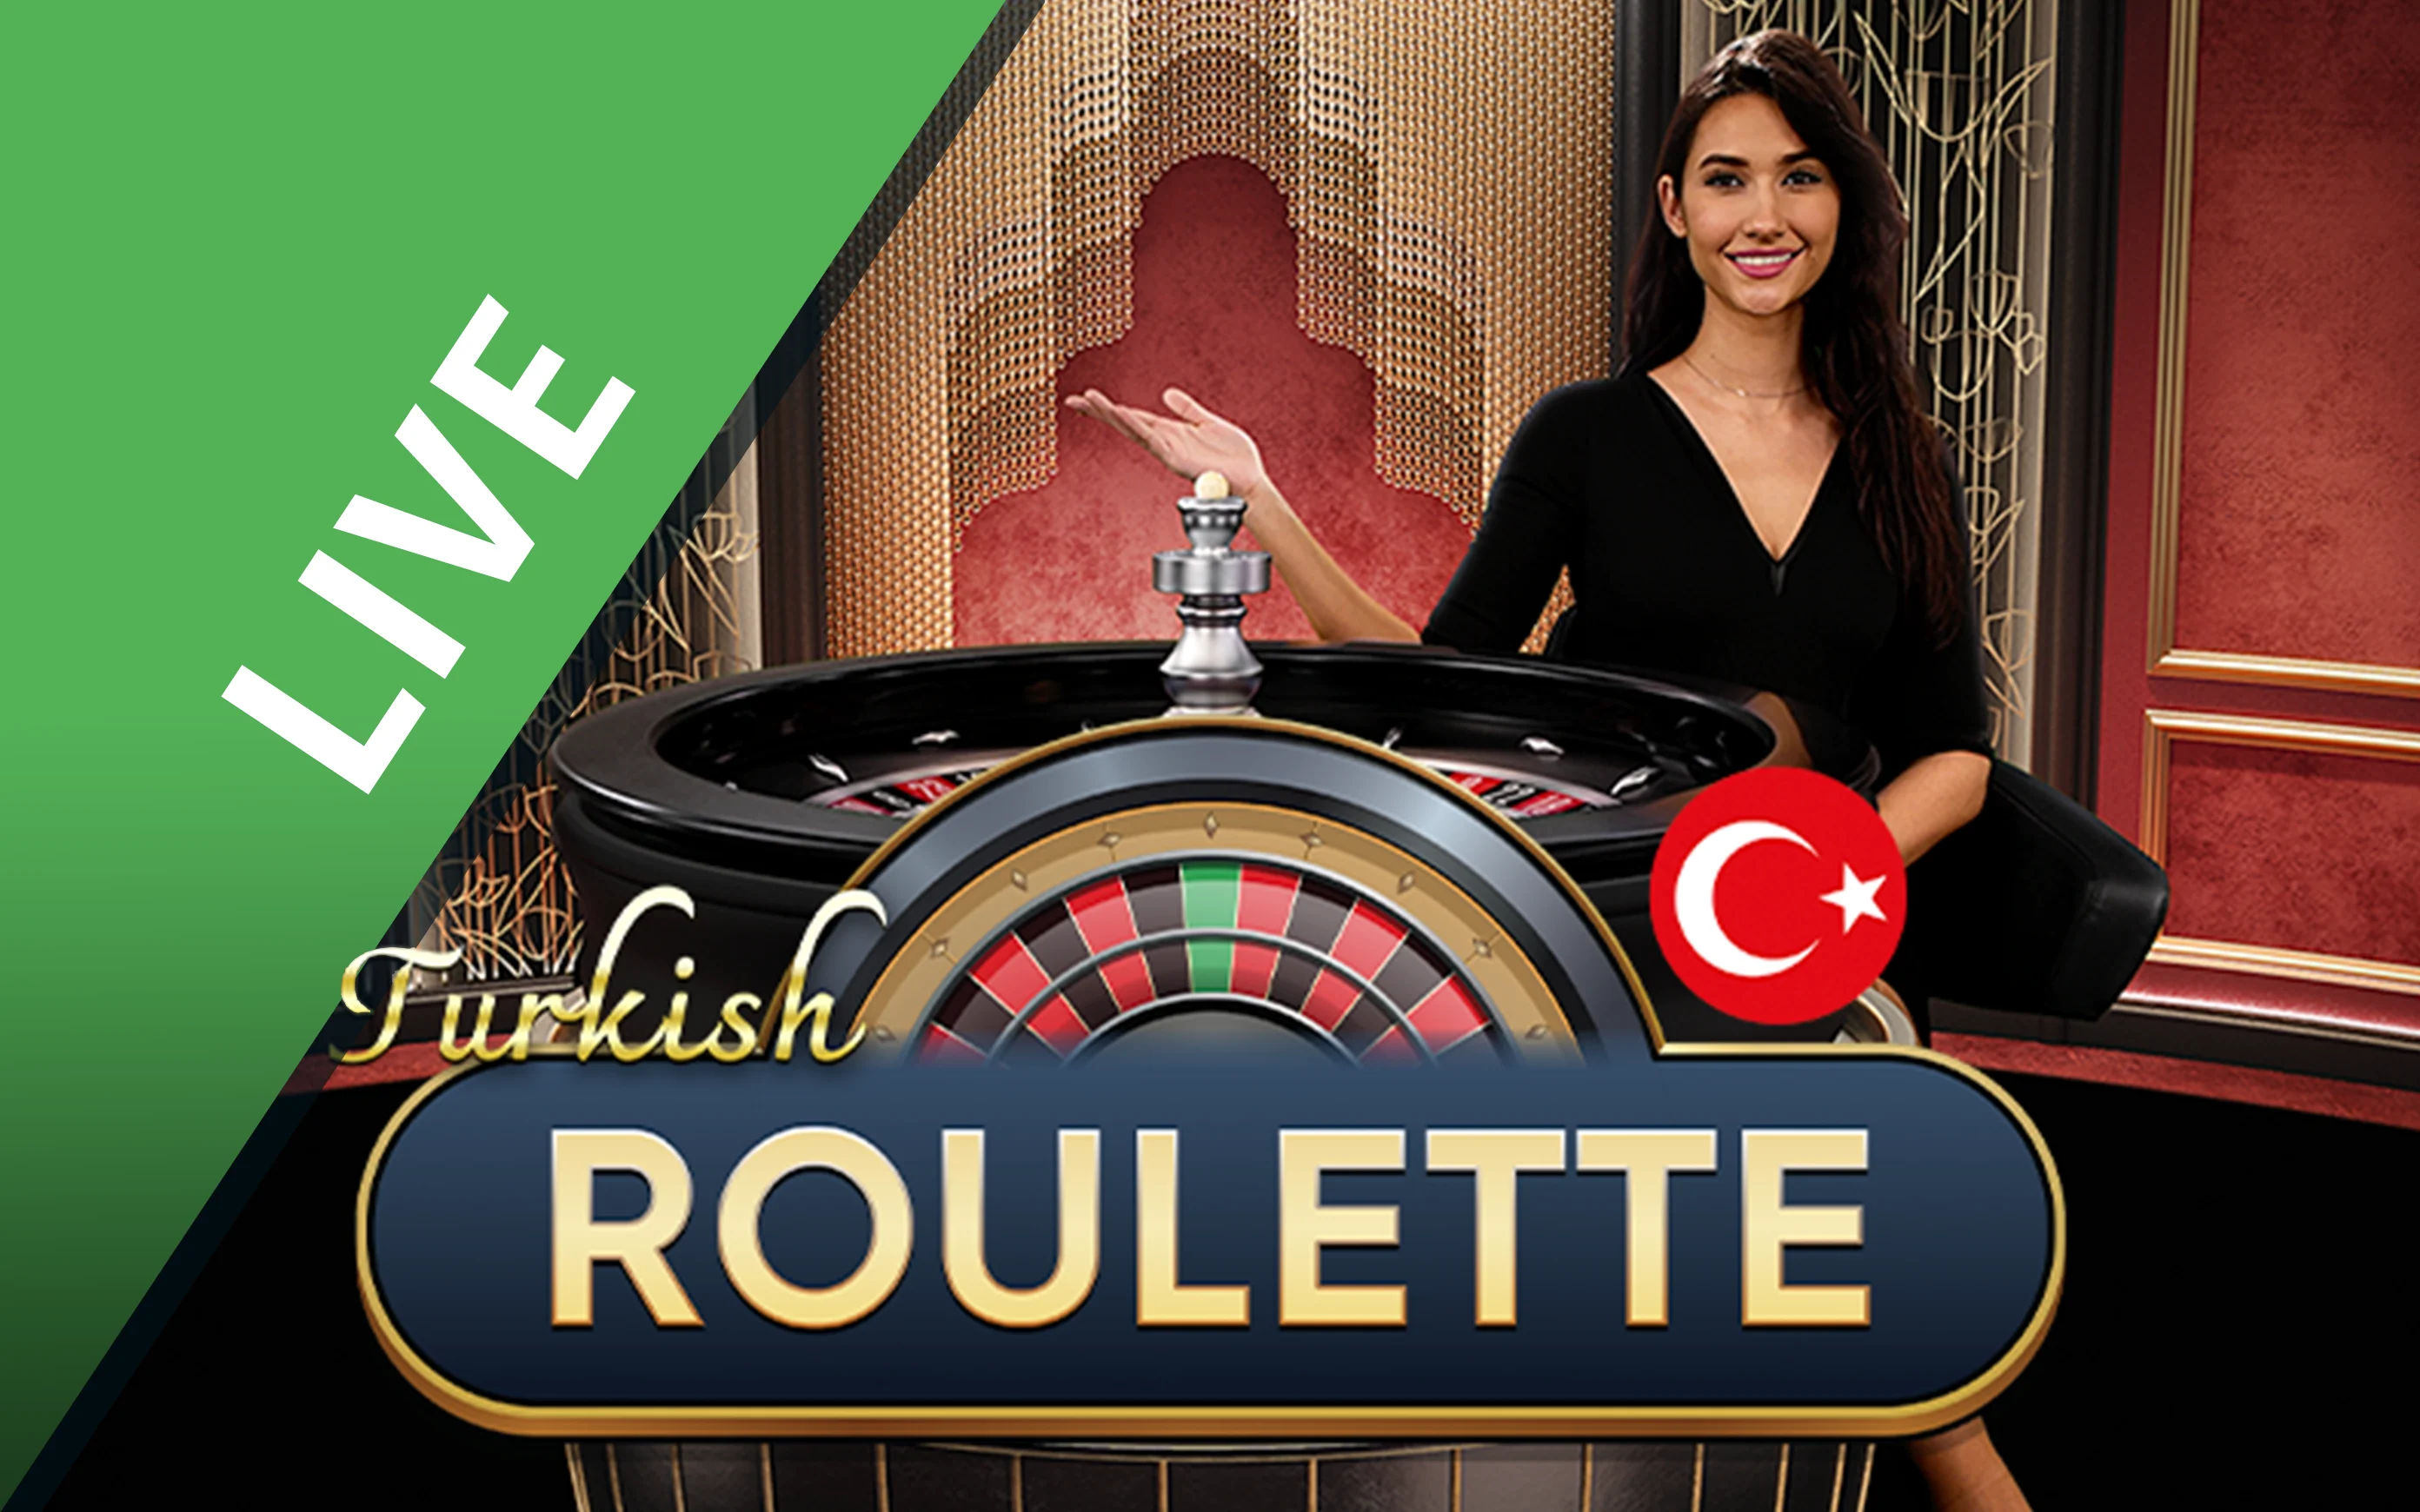 Starcasino.be online casino üzerinden Turkish Roulette oynayın